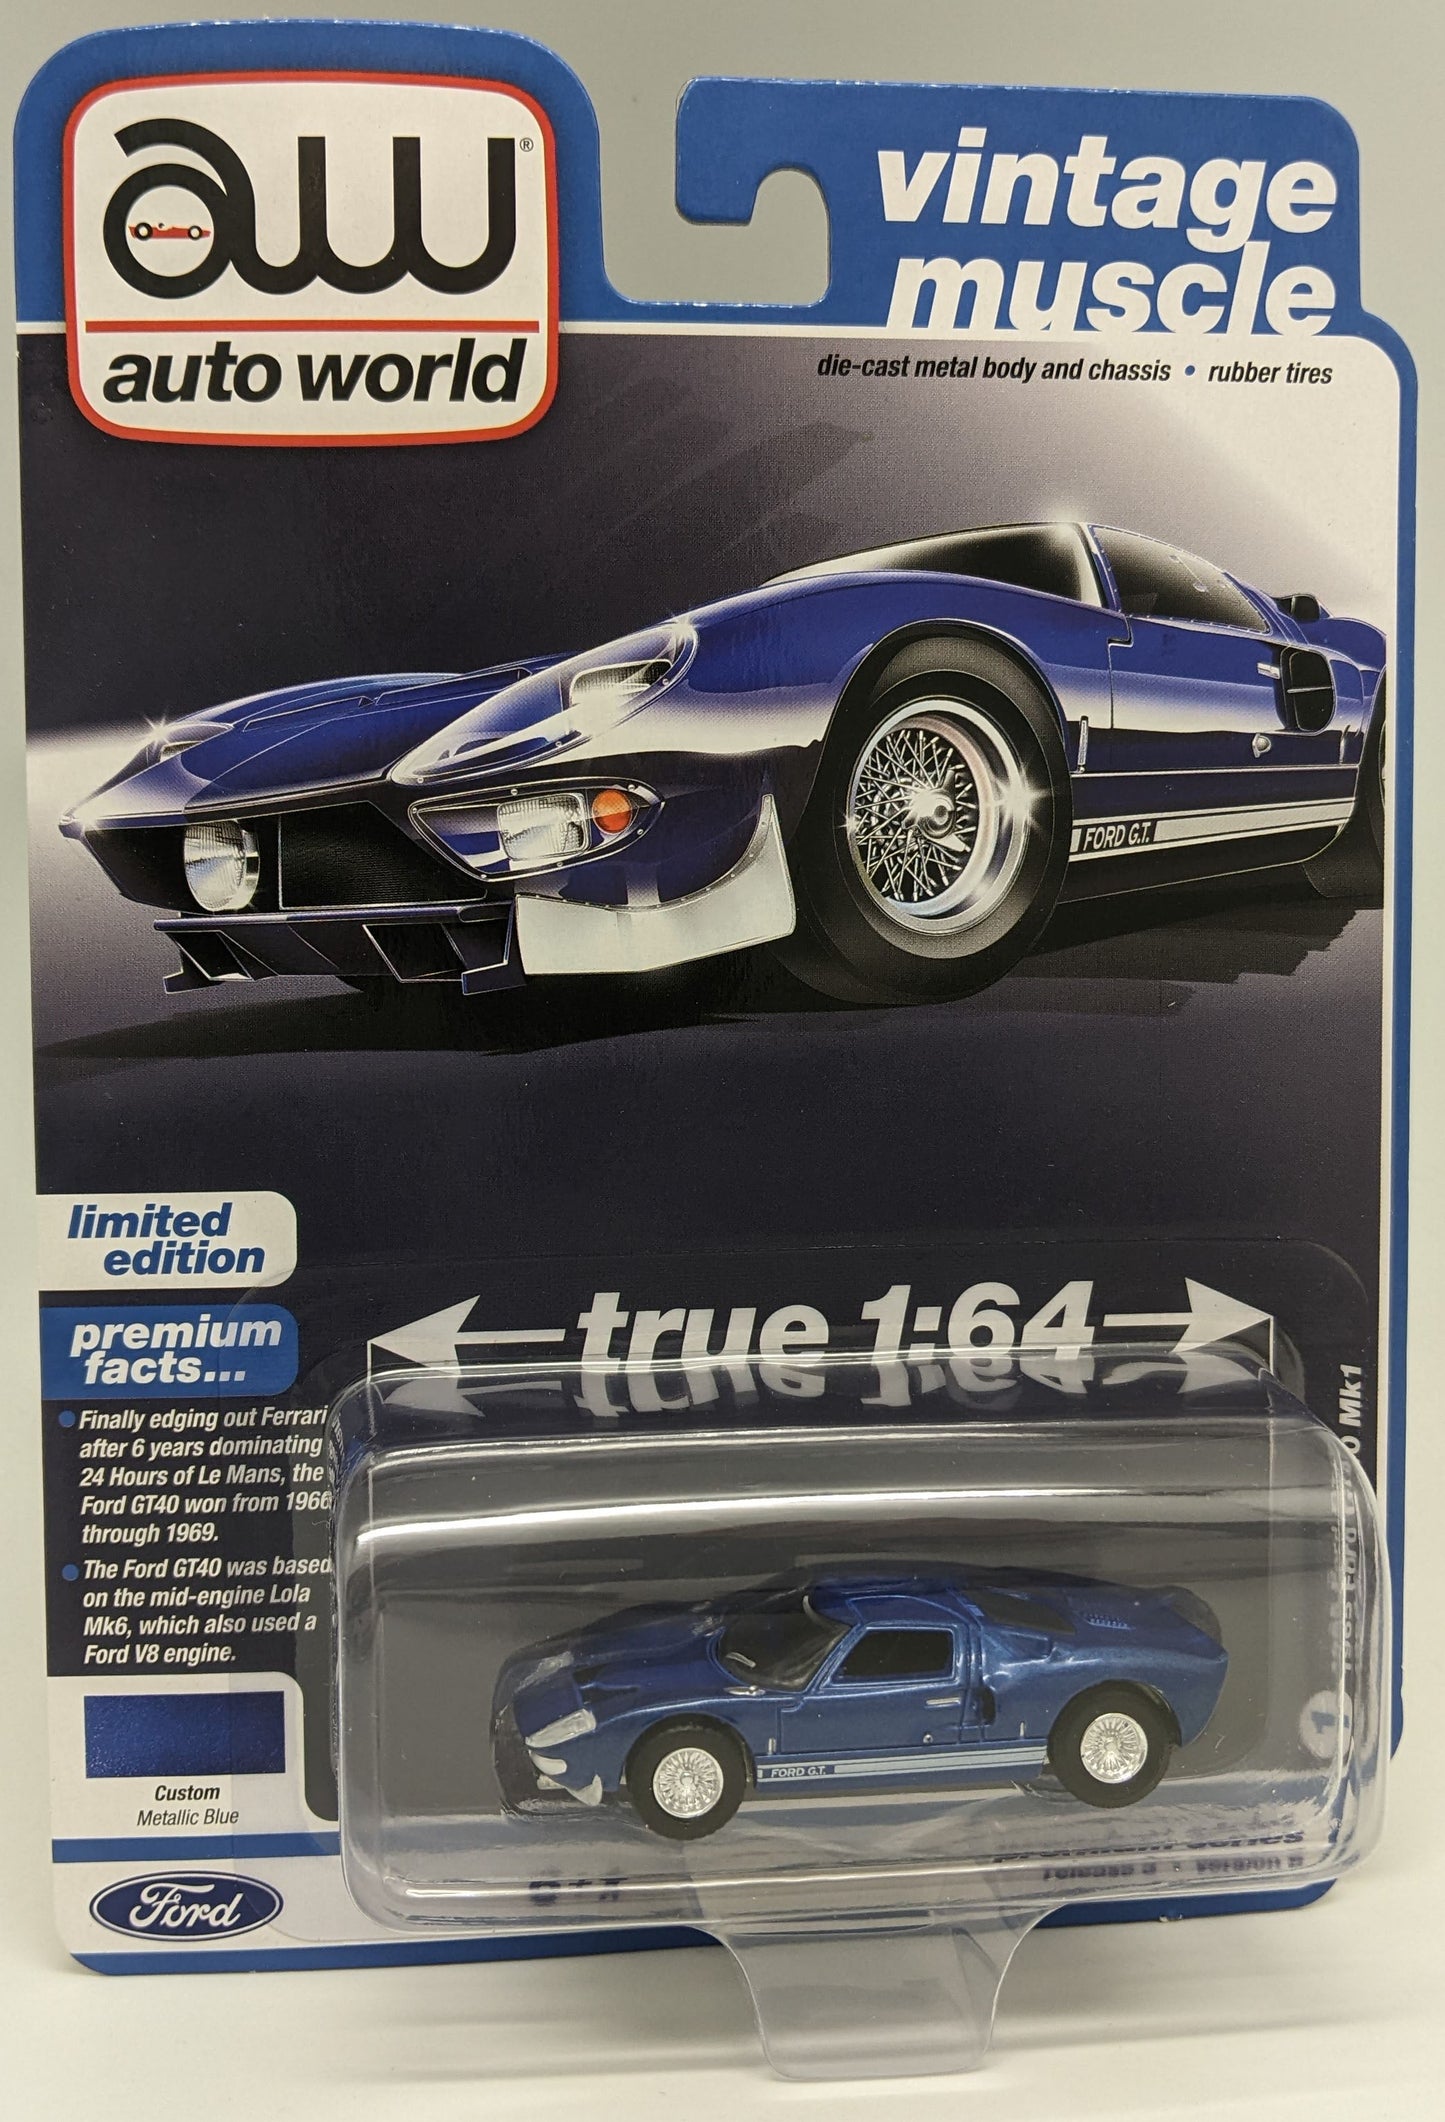 AW 1965 Ford GT40 Mk1 in Metallic Blue